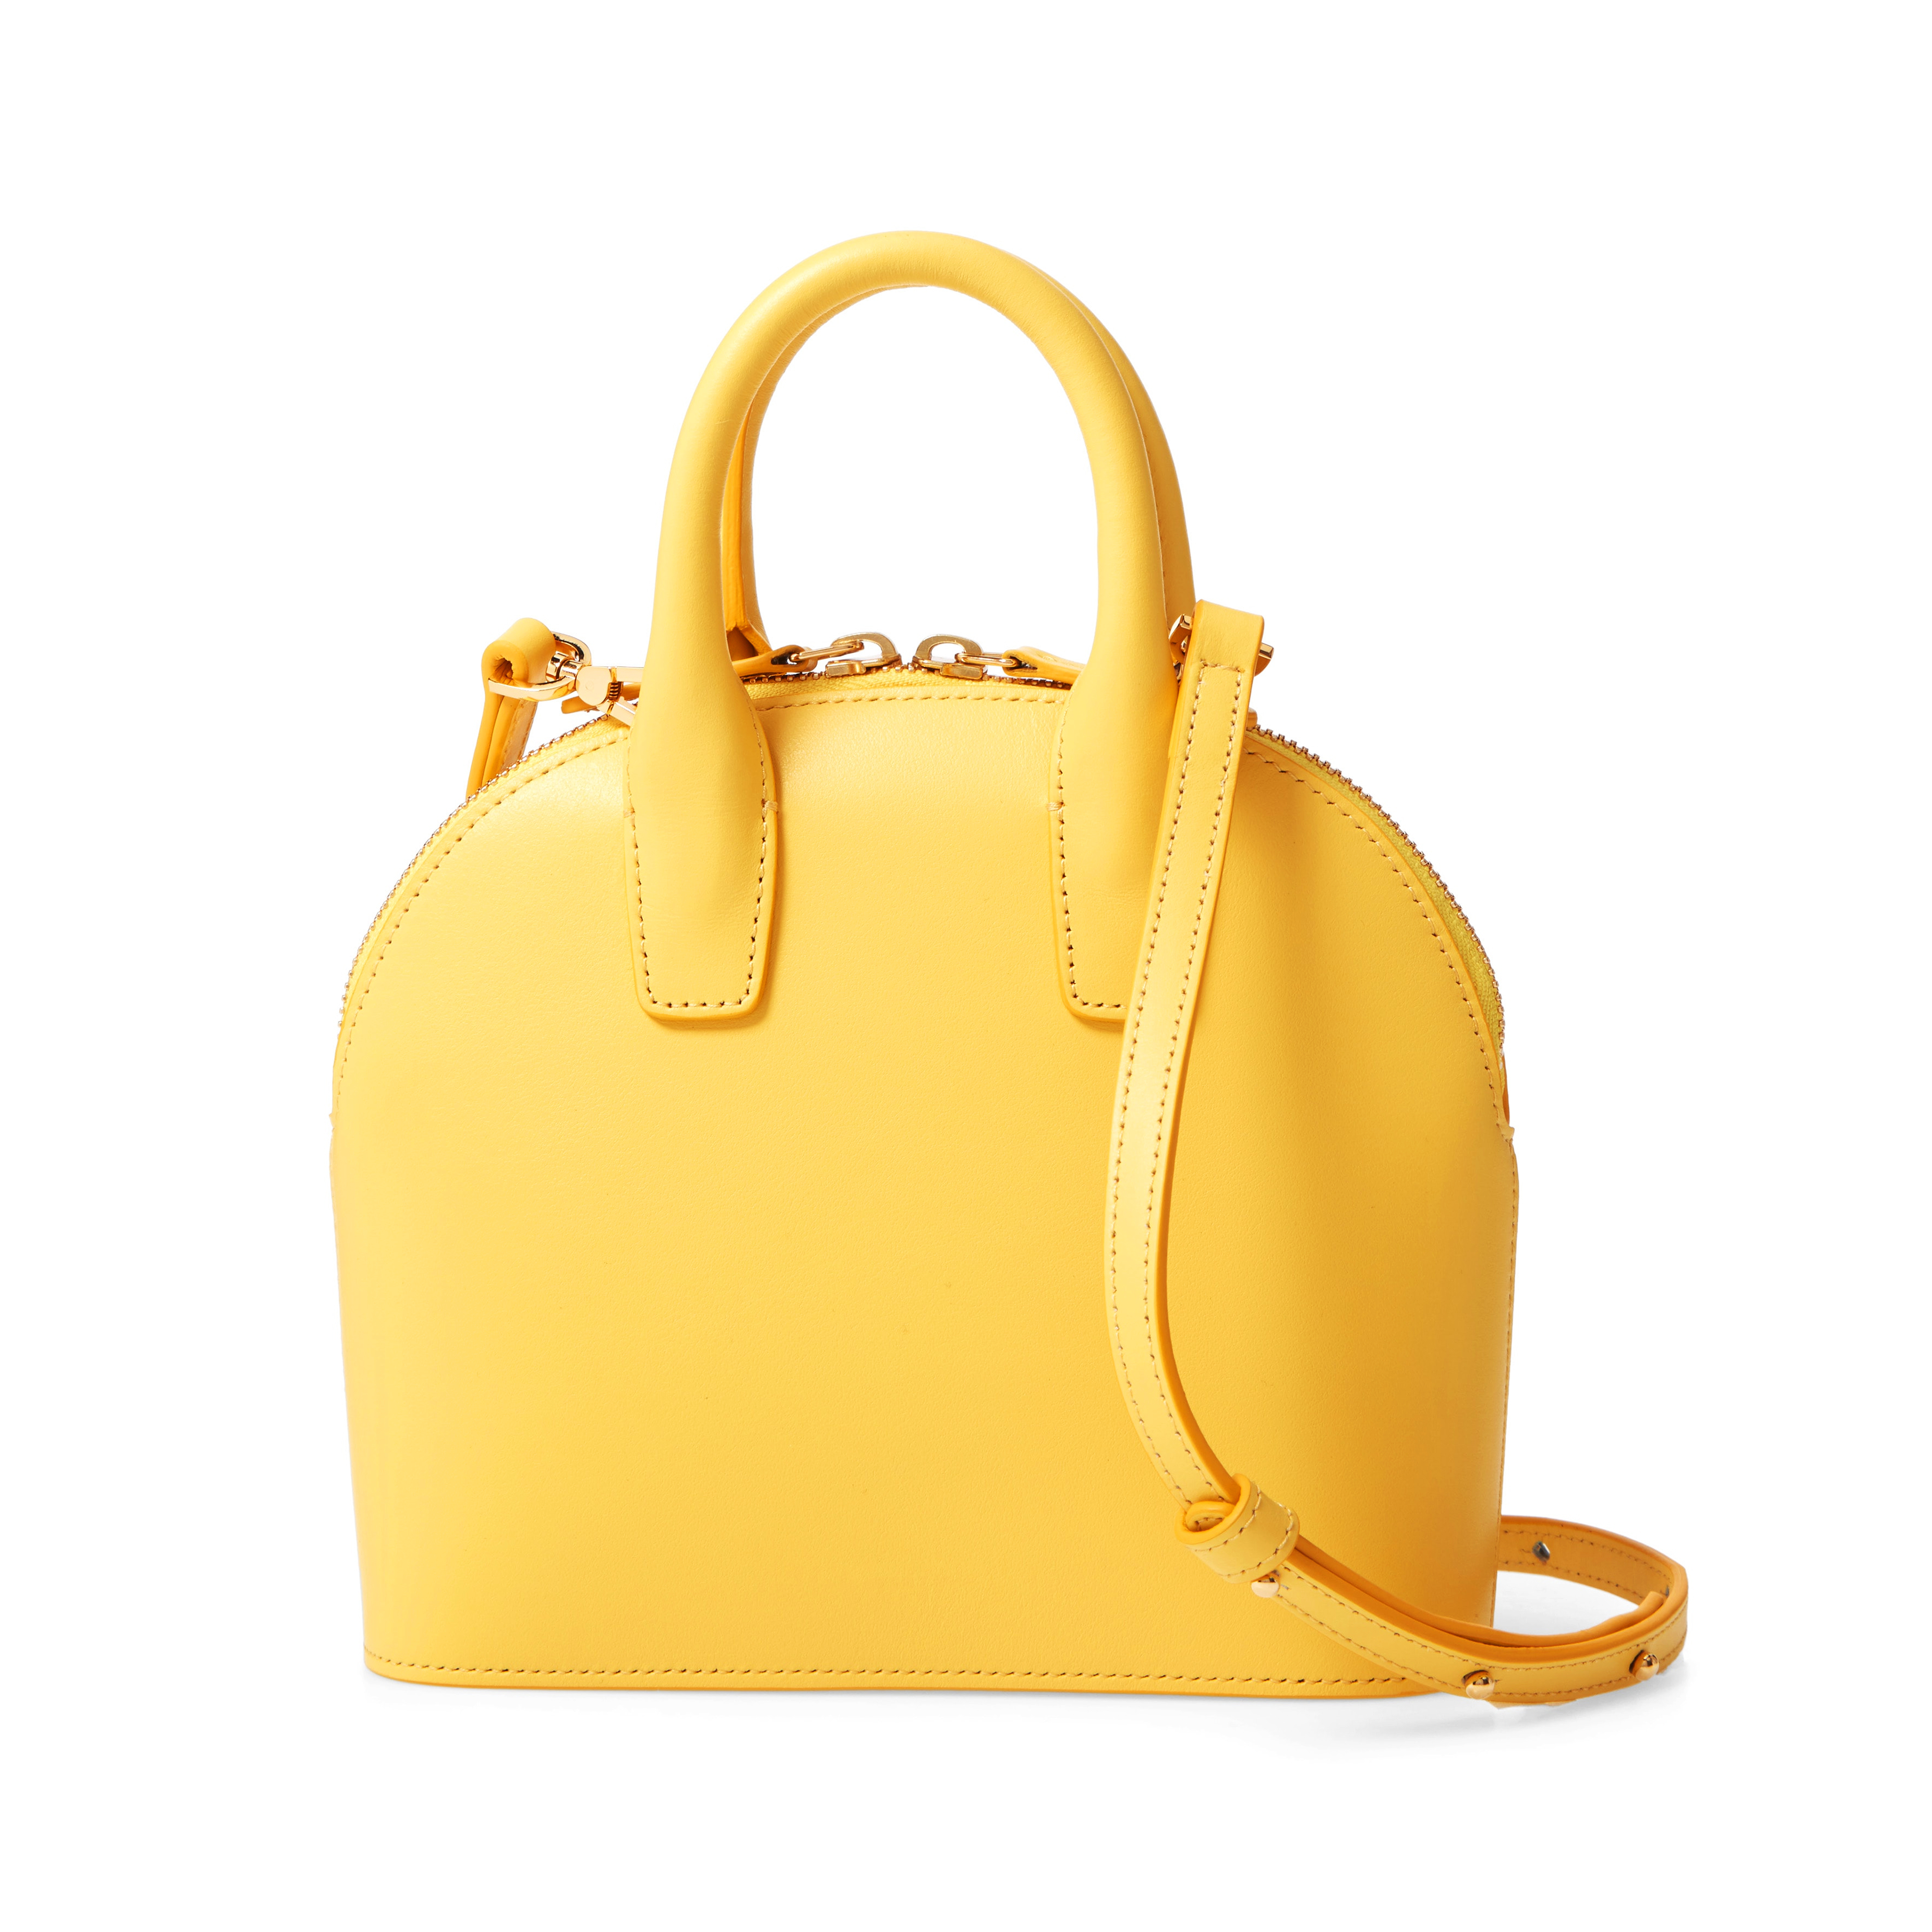 A yellow tote handbag | Source: Shutterstock